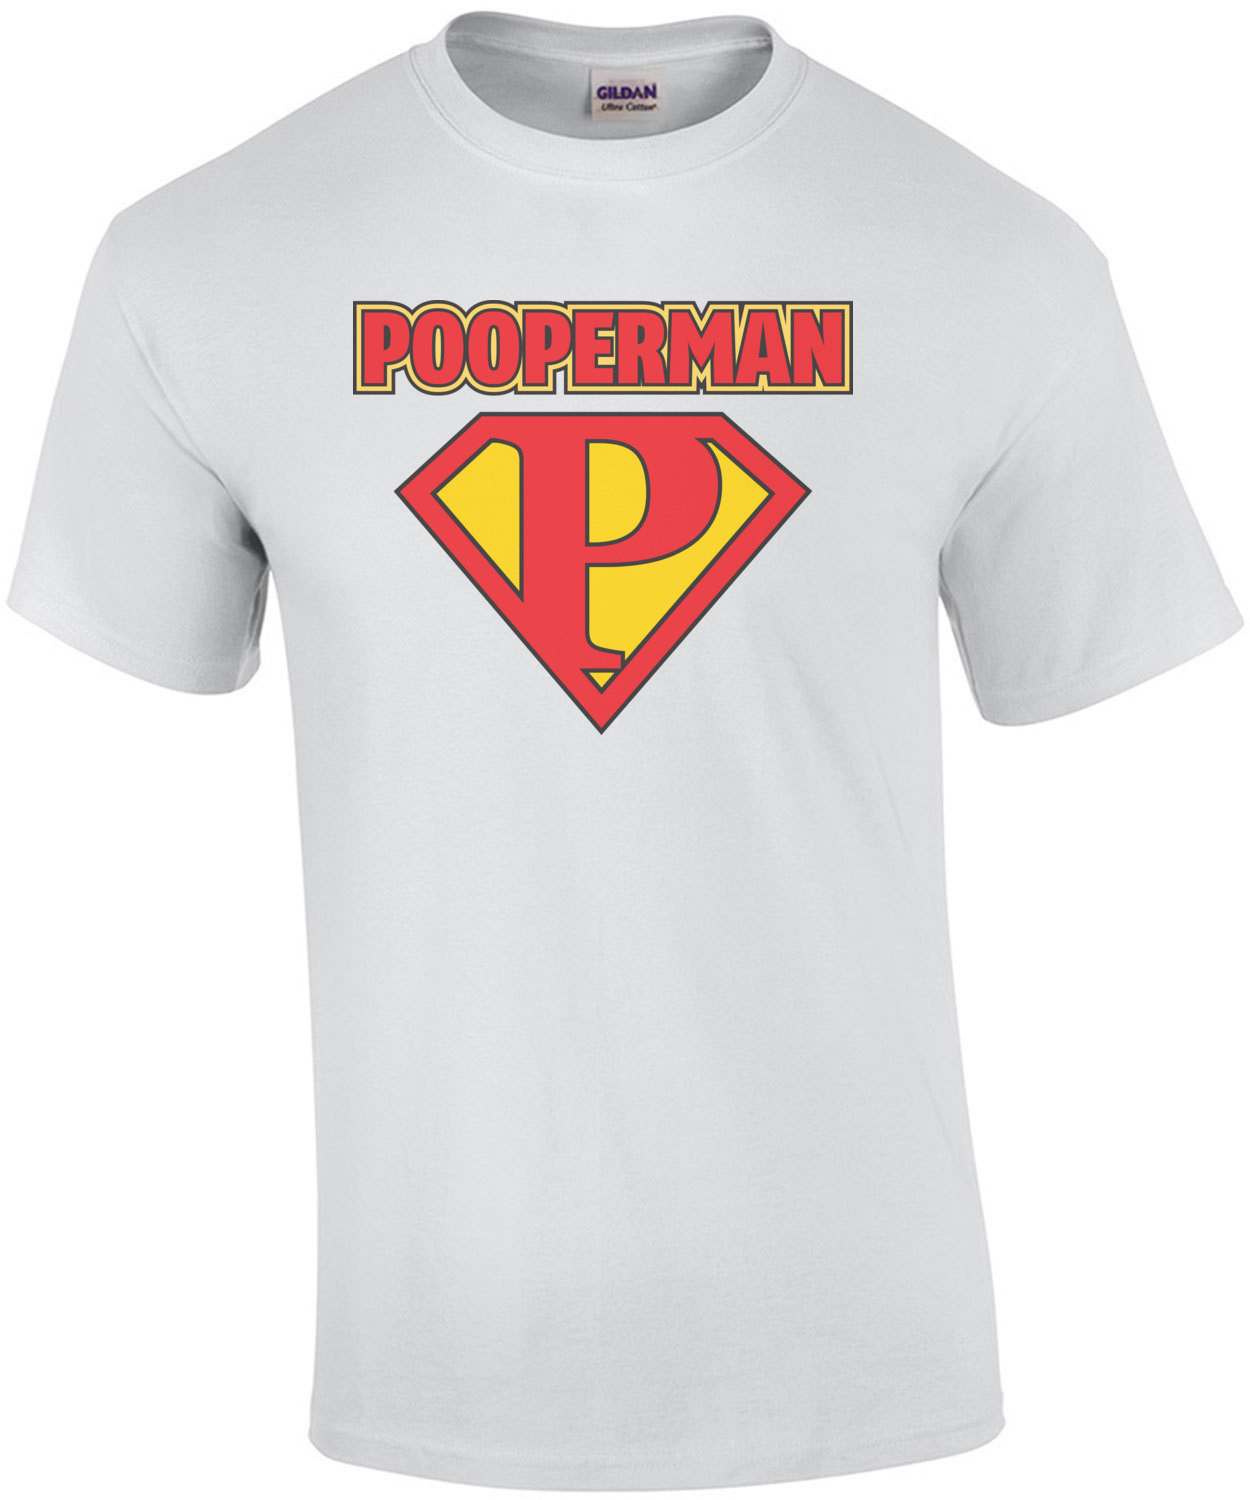 Pooperman Baby Shirt